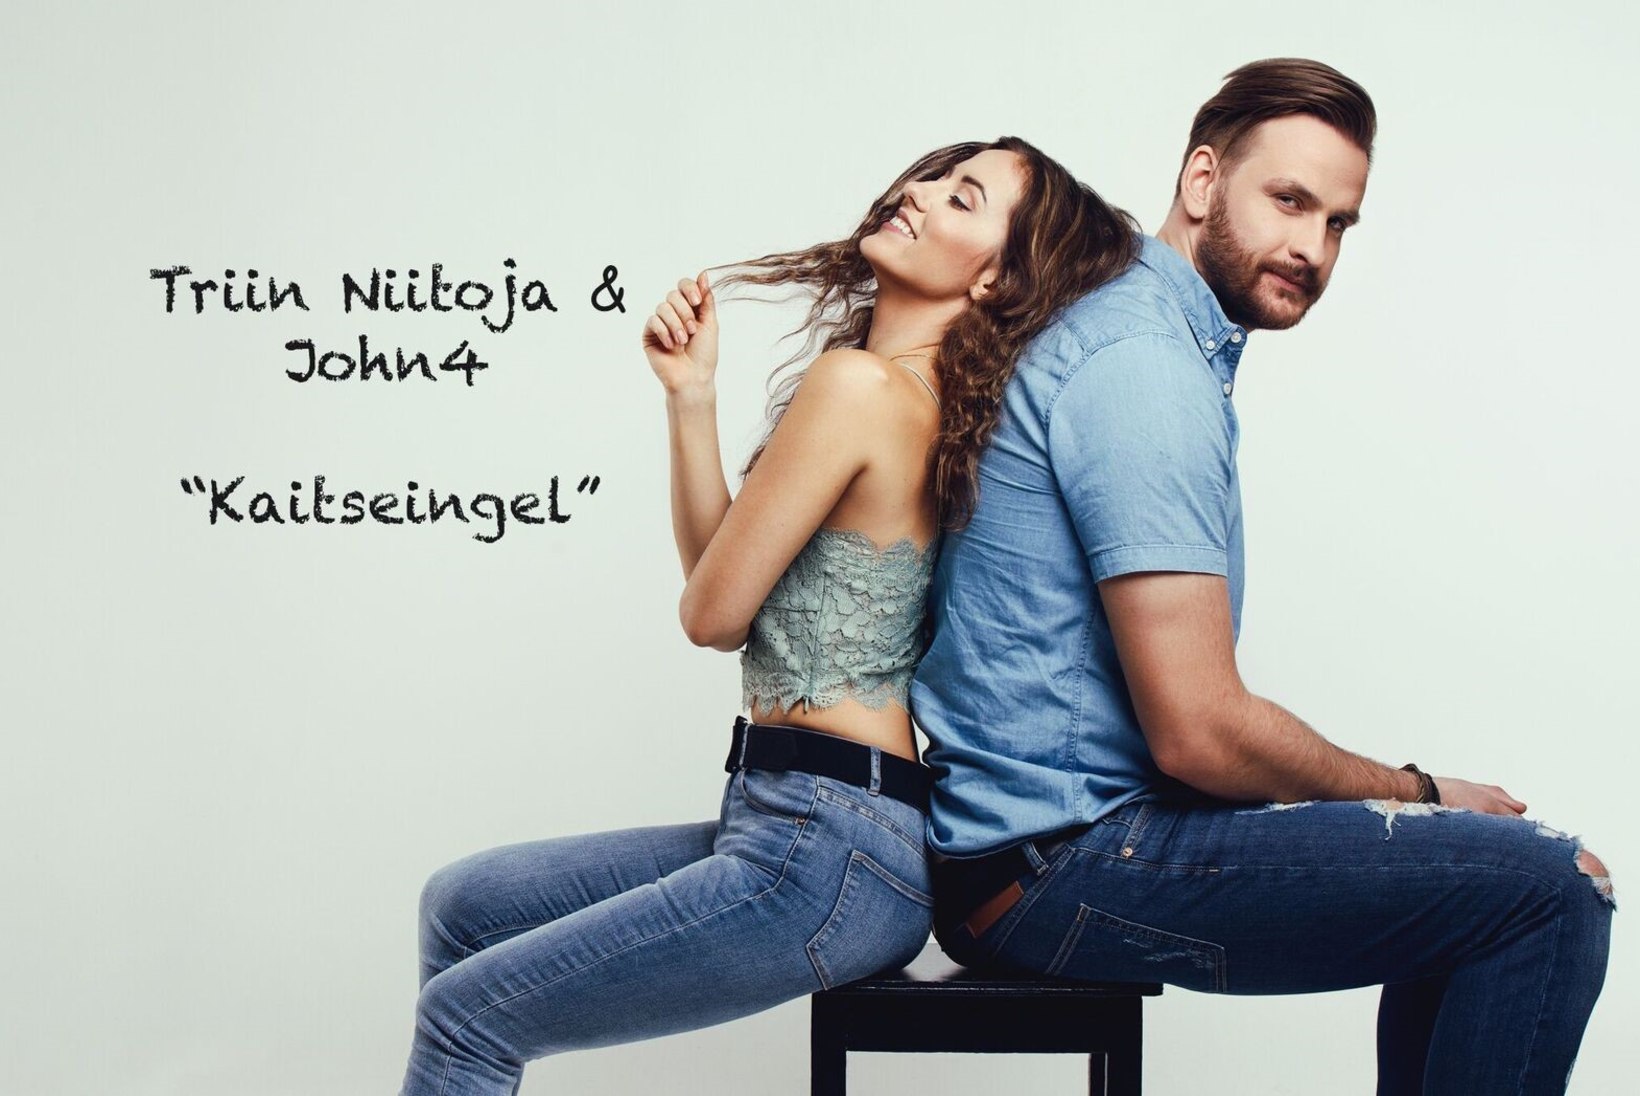 KUULA! Triin Niitoja & John4 avaldas uue suvise singli “Kaitseingel”